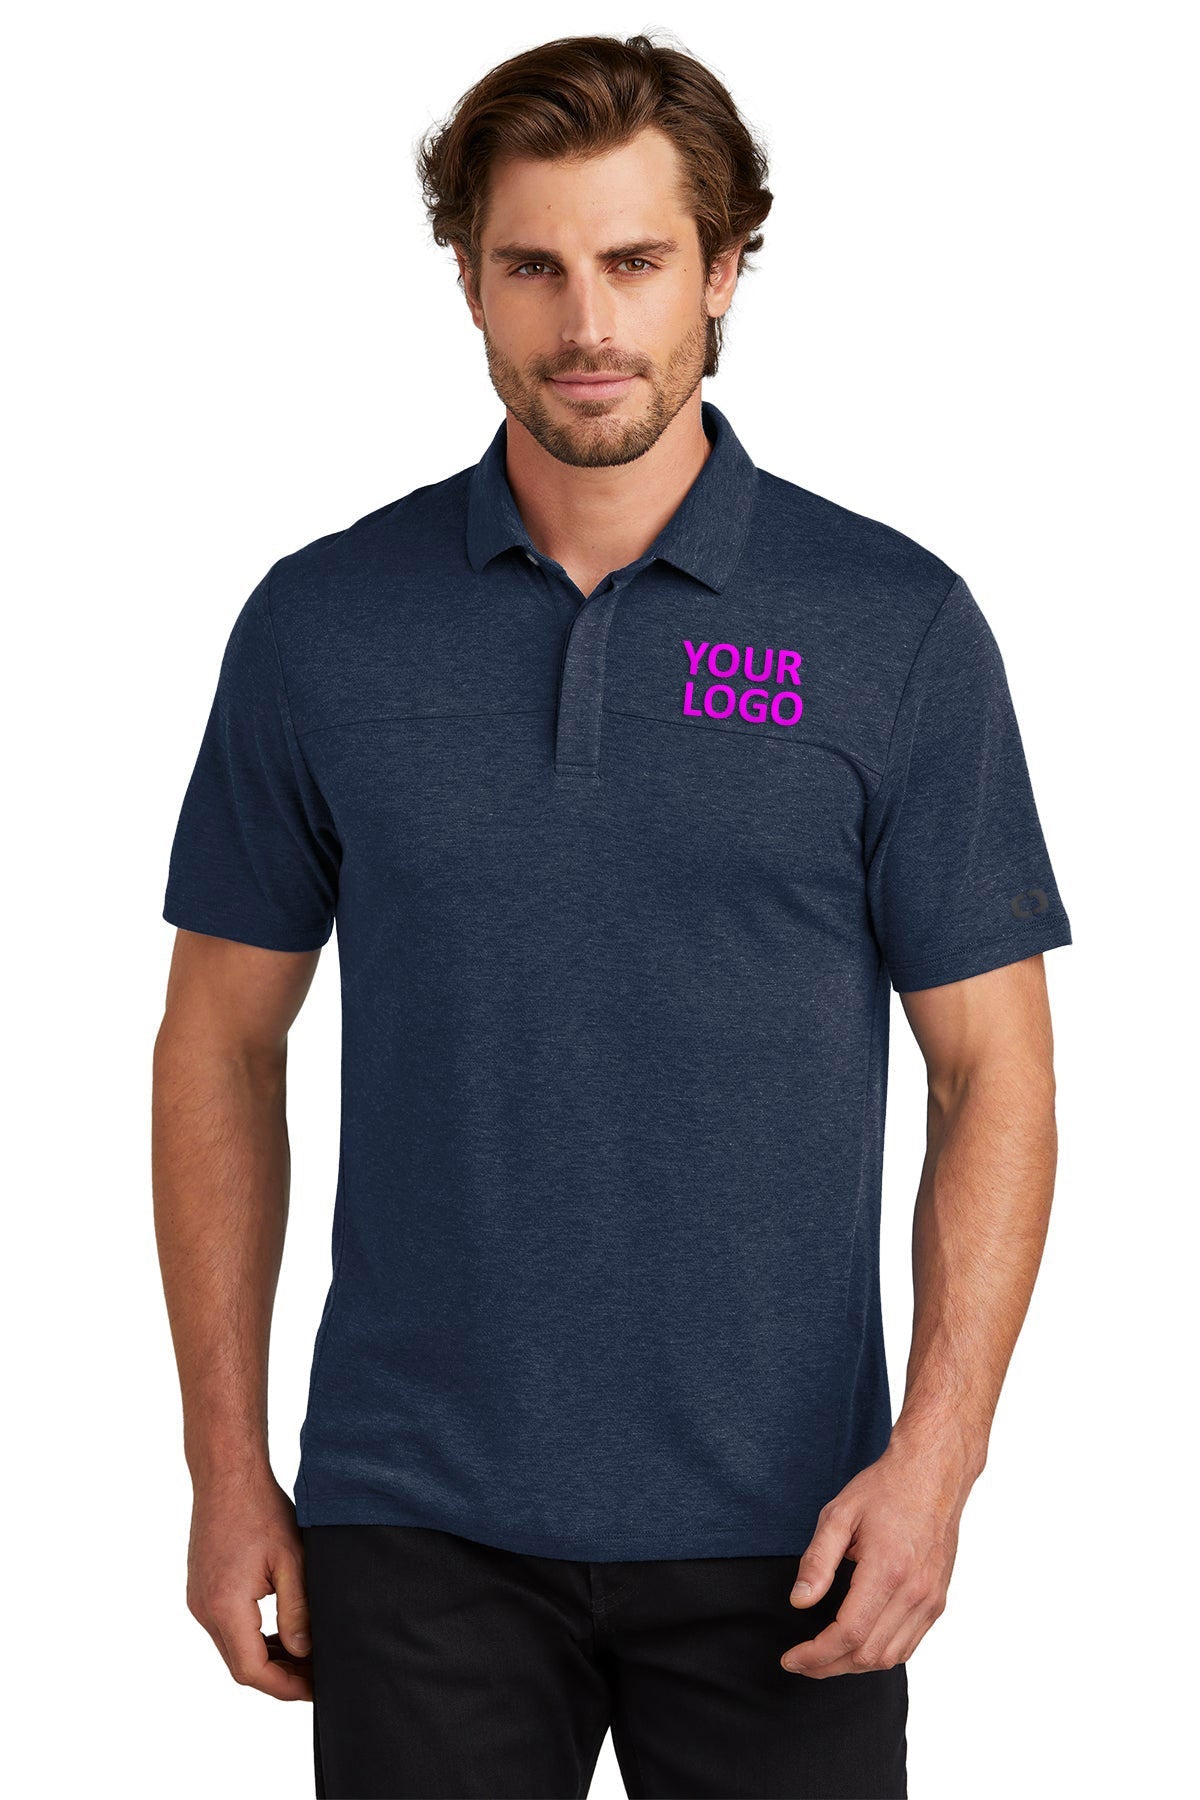 OGIO River Blue Navy OG150 custom logo polo shirts embroidered